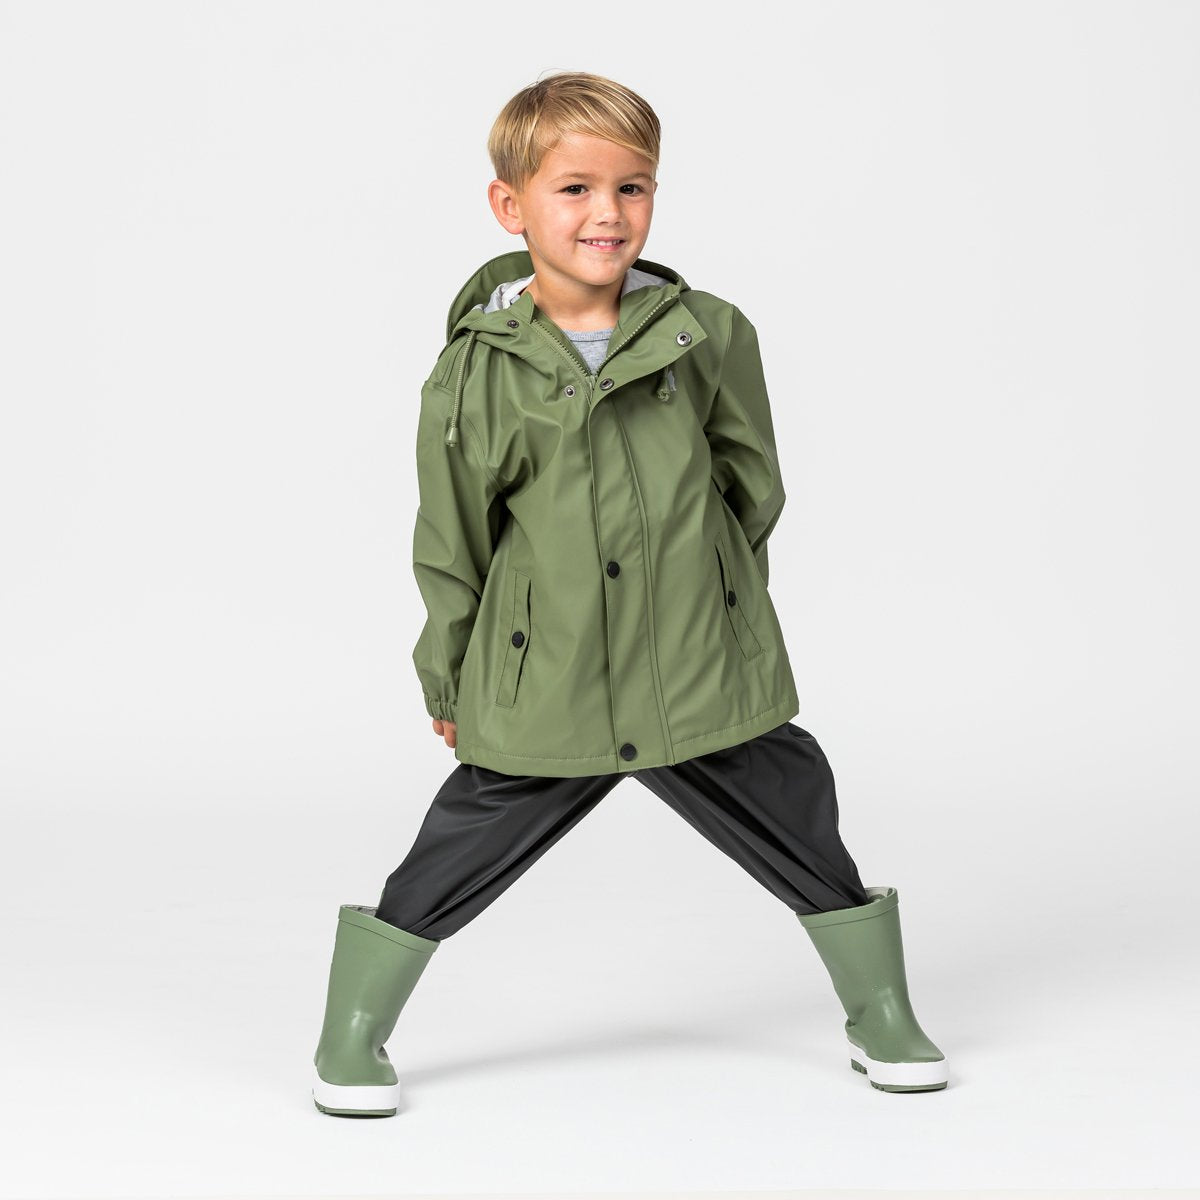 Kid wearing Crywolf Rain Jacket in green/khaki